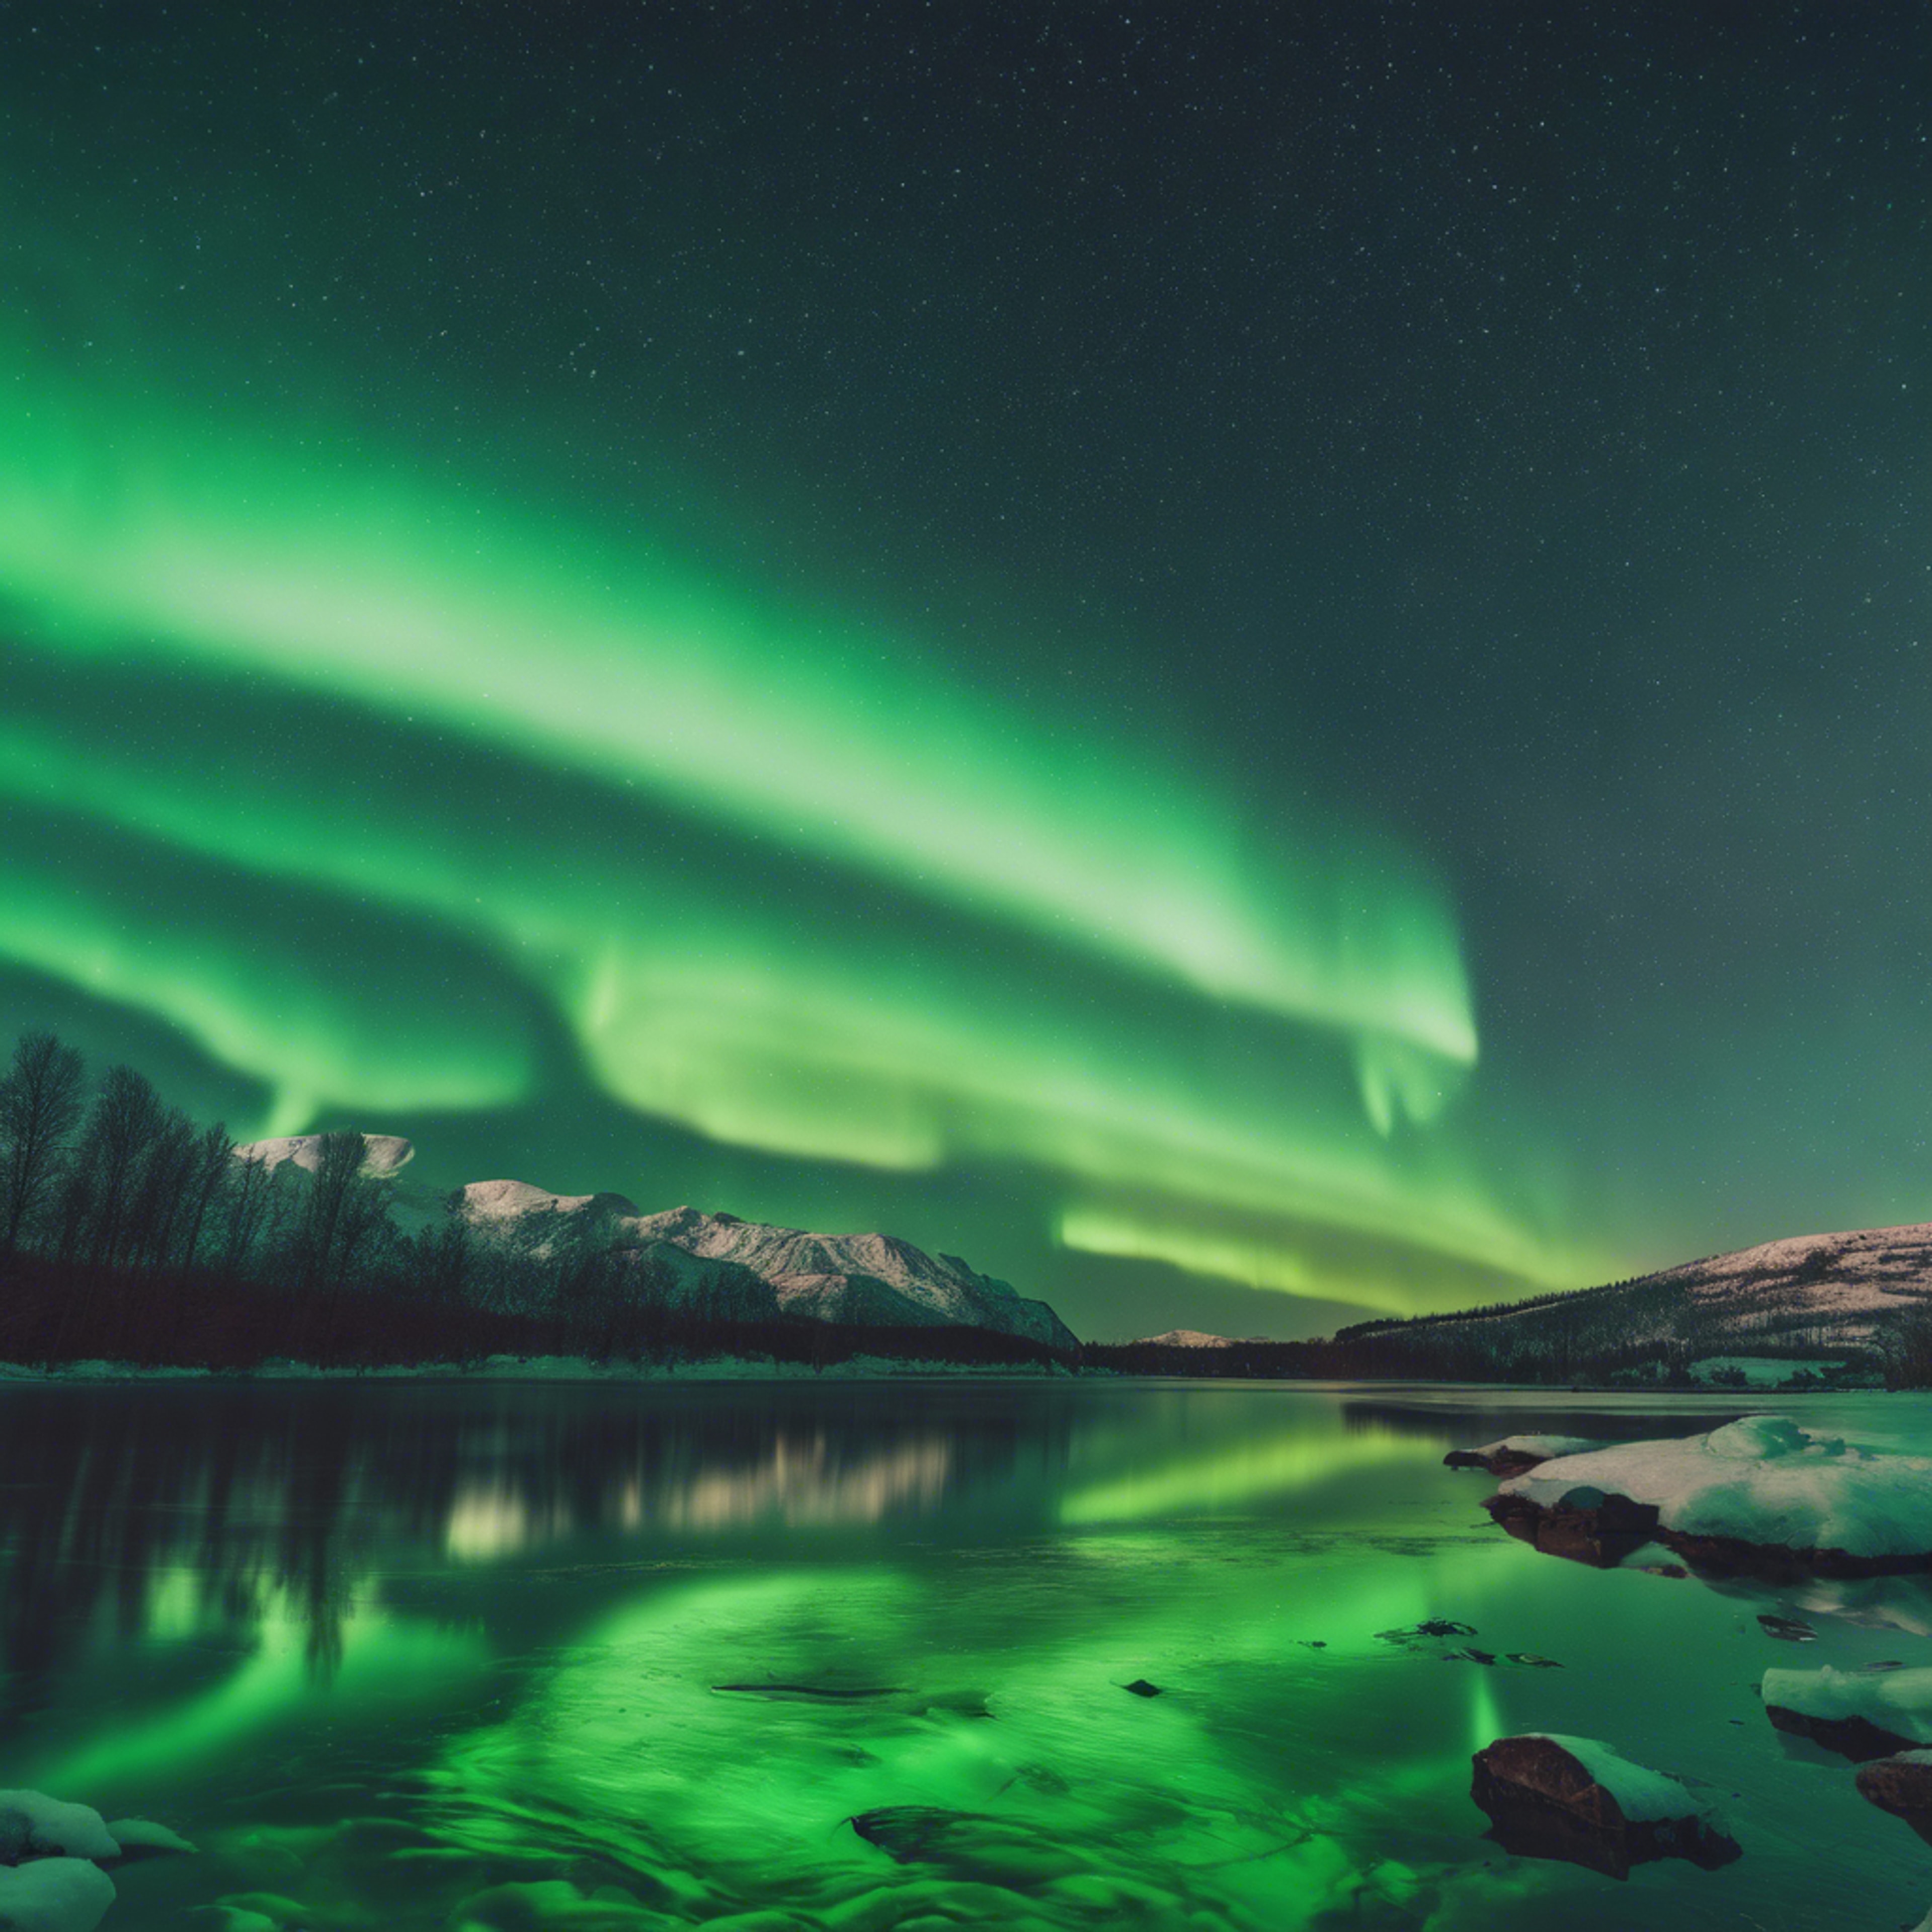 Cool green aurora borealis in the night sky. ورق الجدران[6739bc2aef4a46929ef0]